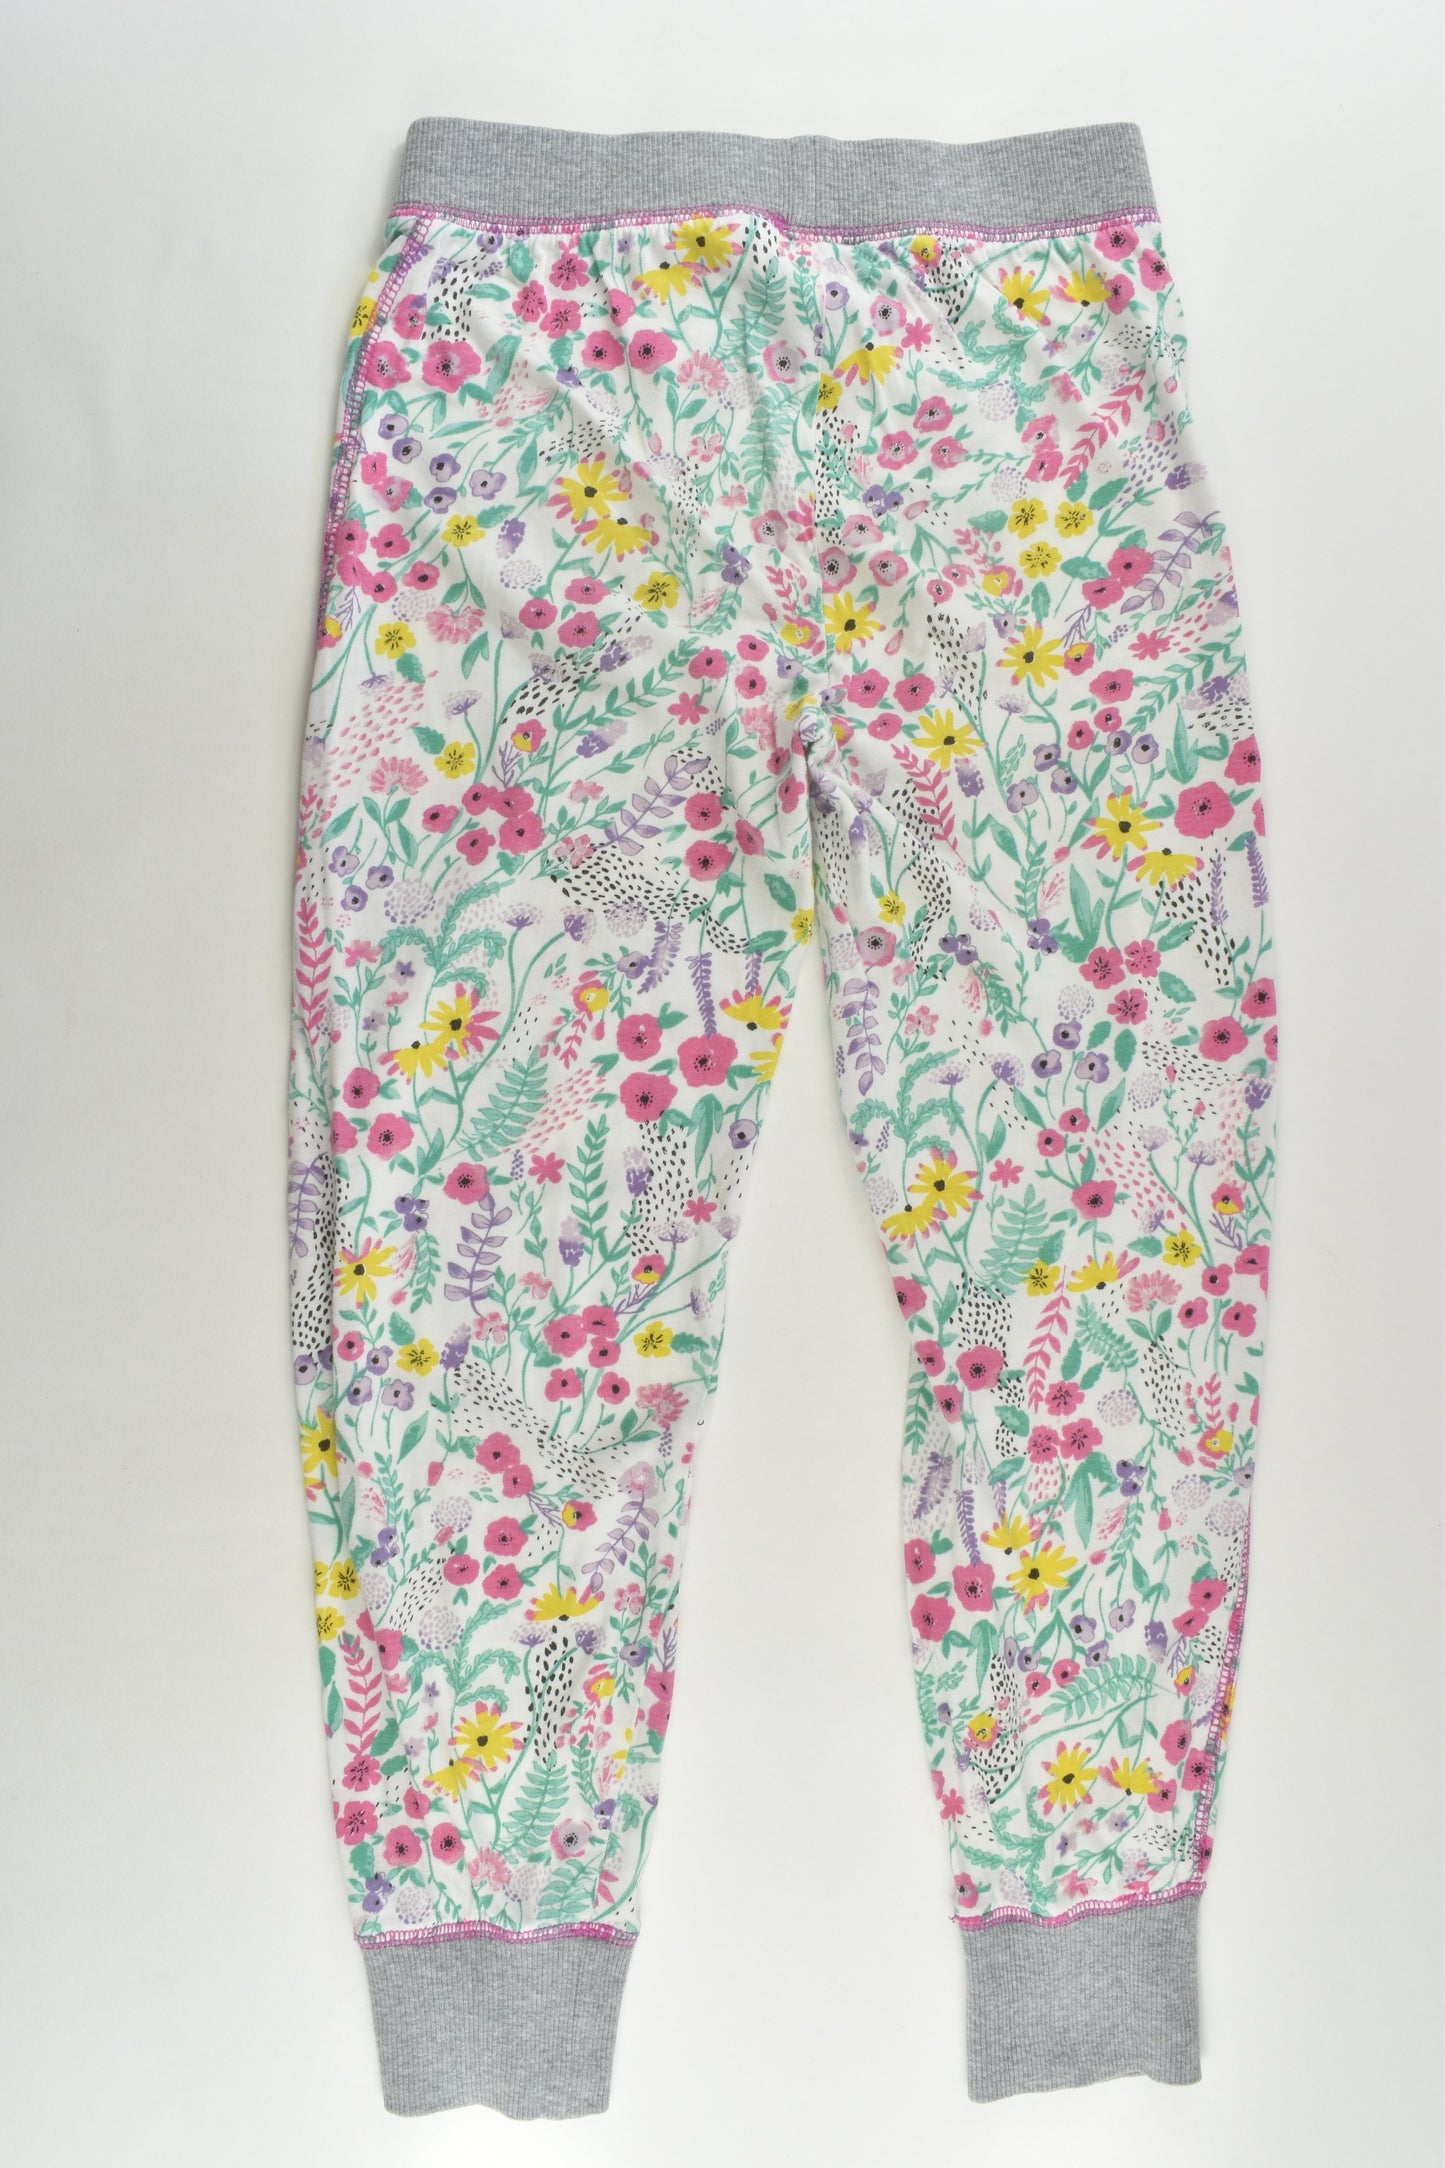 Sussan Size 6-7 'You Belong Among The Wildflowers' Pyjamas